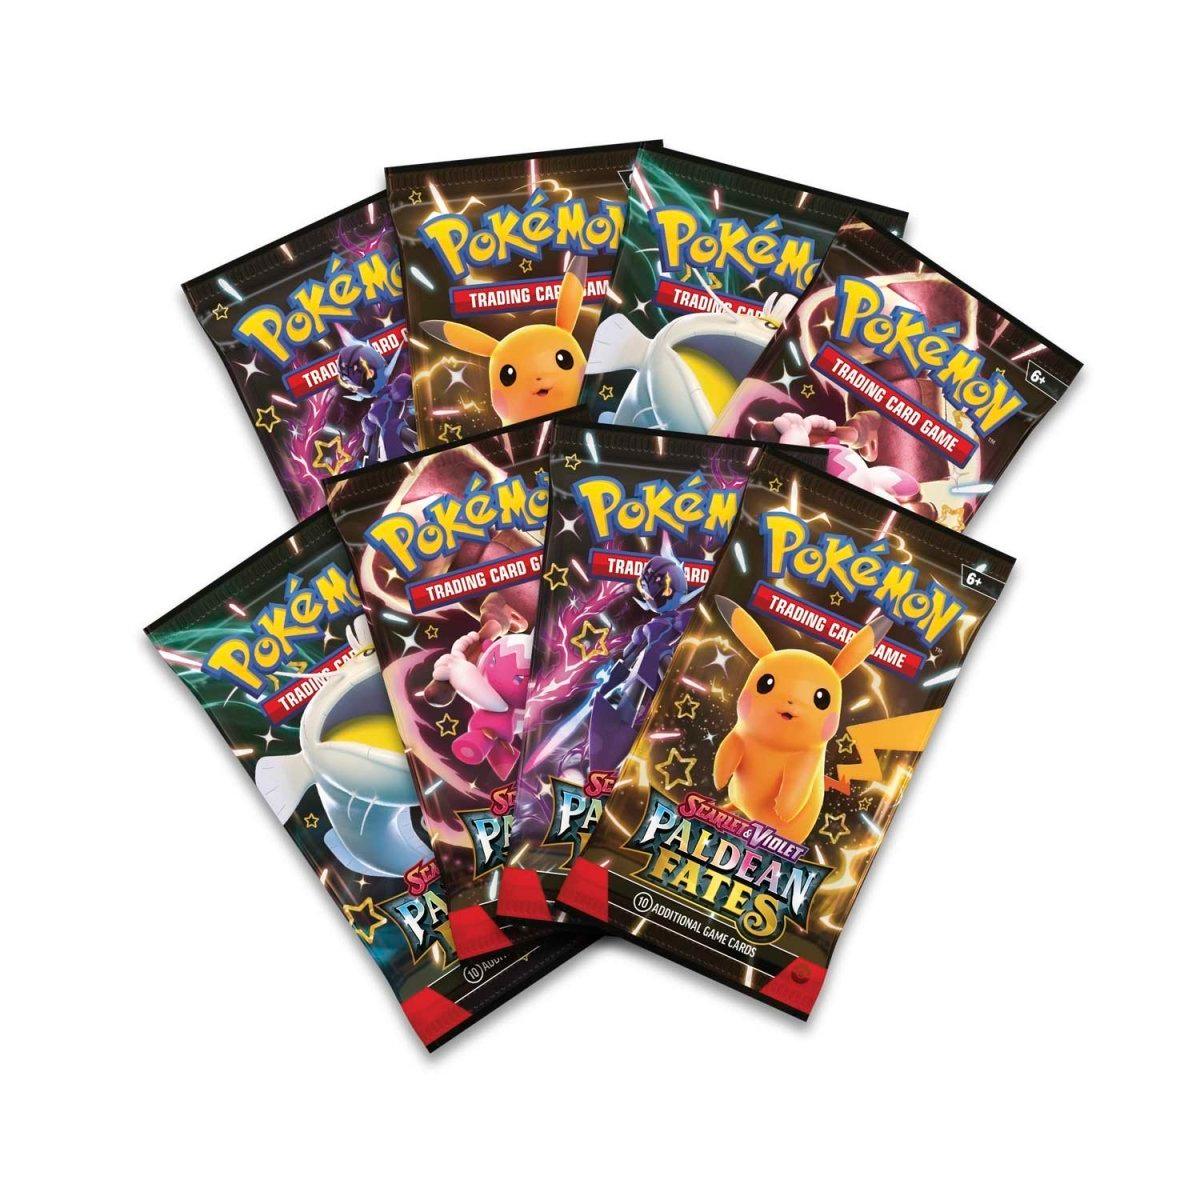 Pokemon Box - Premium Collection - Paldean Fates - Skeledirge ex - Hobby Champion Inc